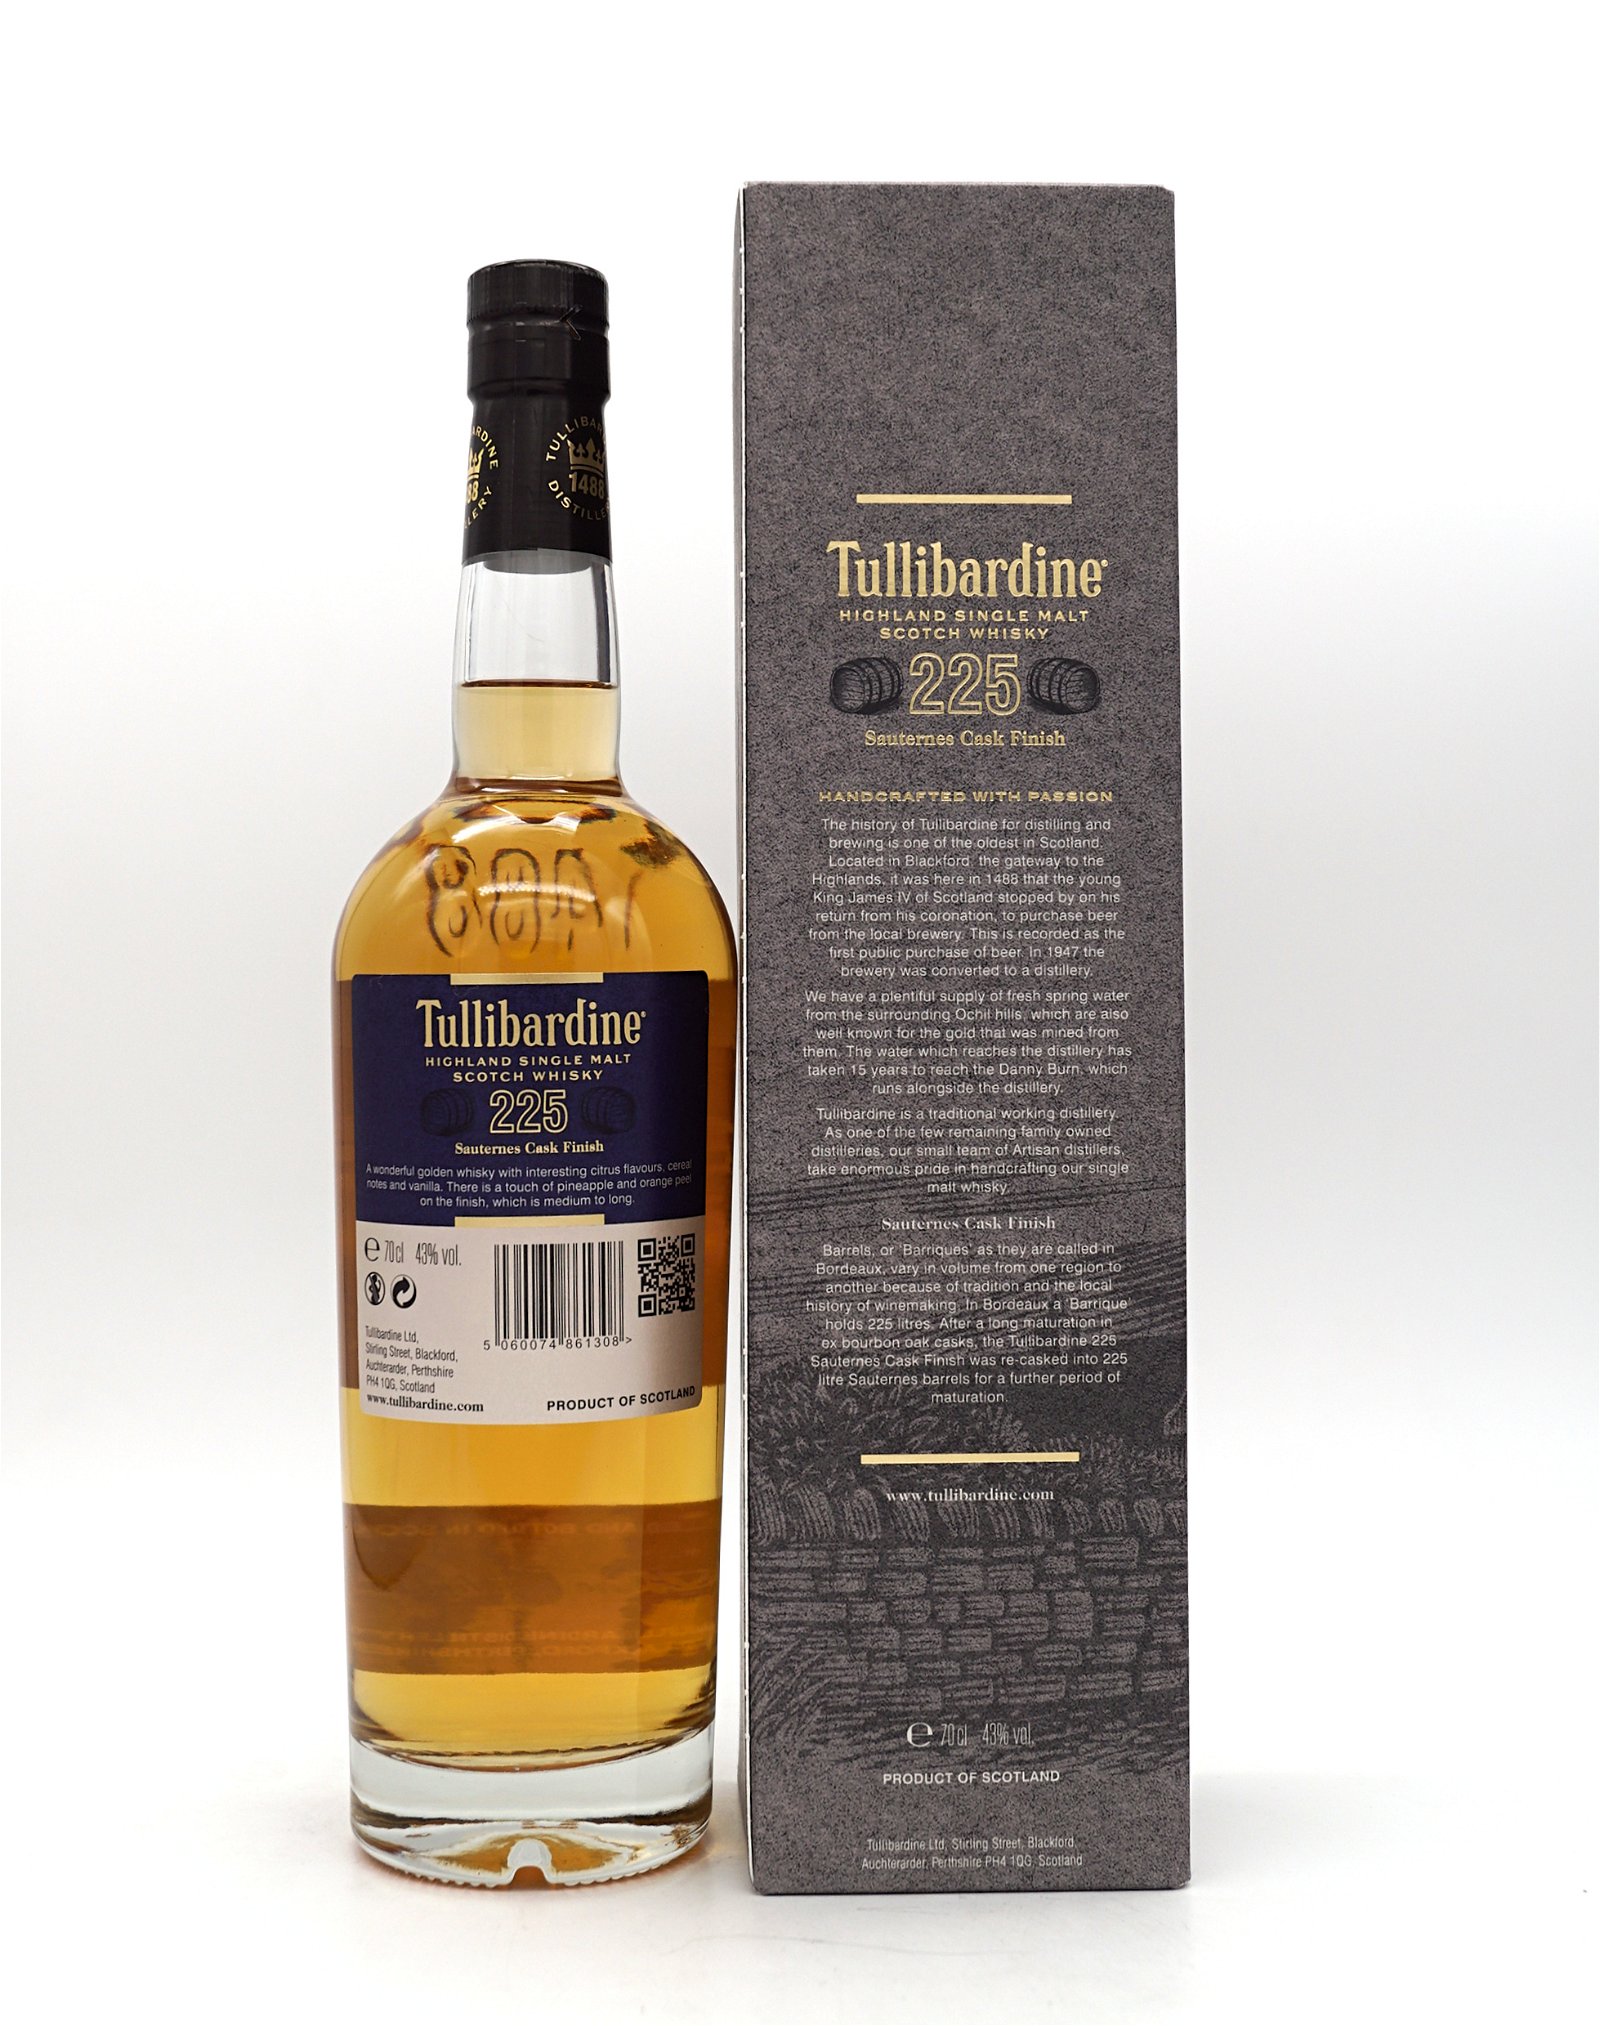 Tullibardine 225 Sauternes Cask Finish Highland Single Malt Scotch Whisky 